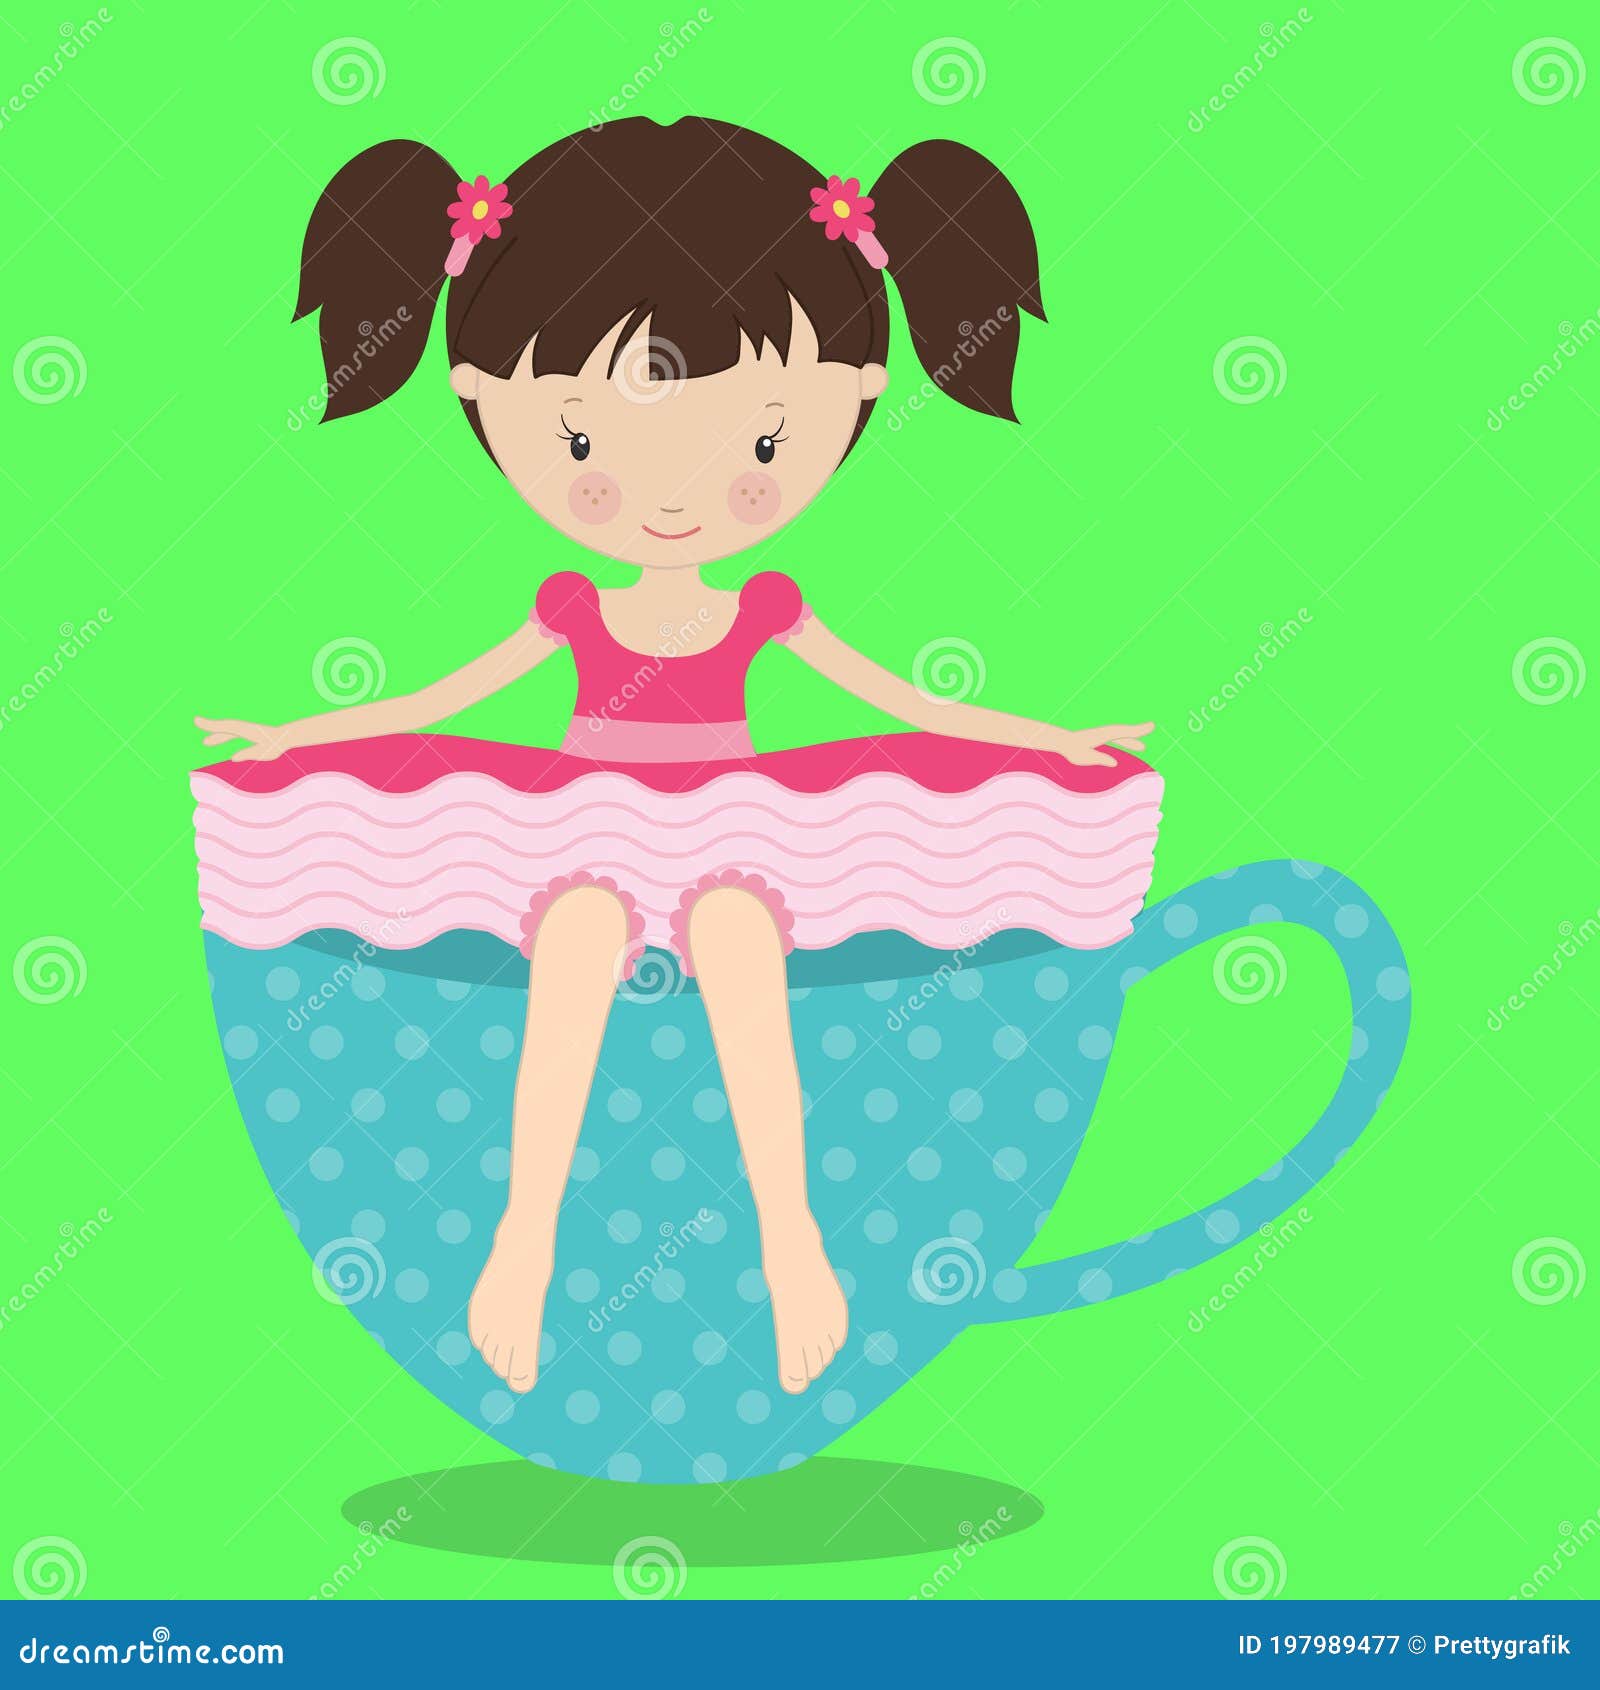 Tea girls pink brown 01 stock vector. Illustration of girls - 197989477